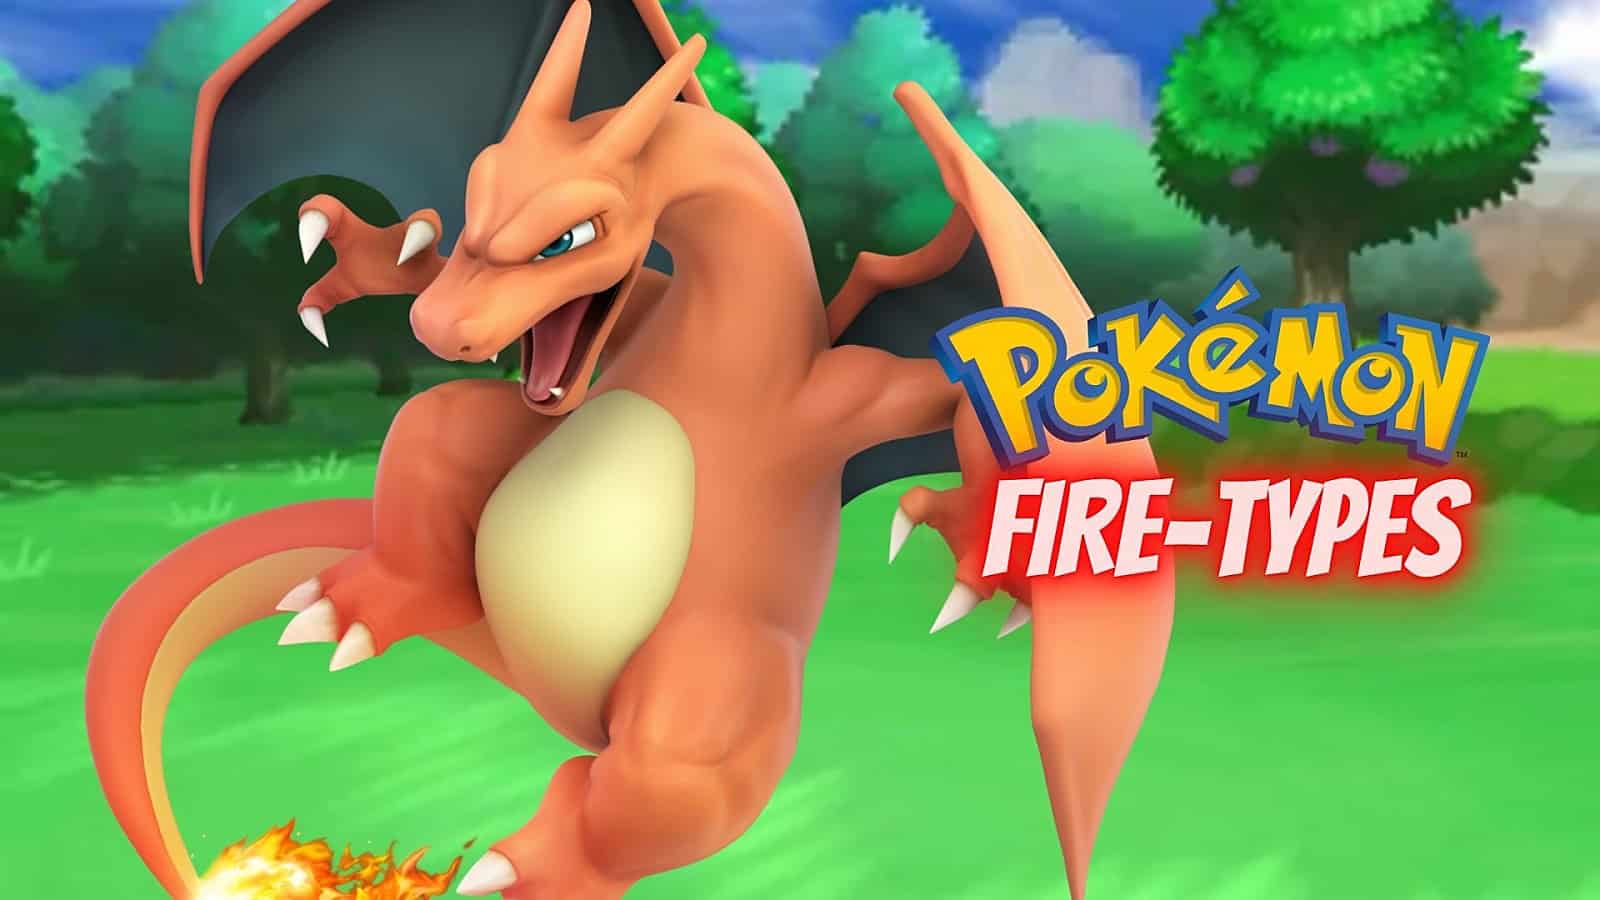 15 best Fire-type Pokemon ranked: Charizard, Moltres, Reshiram ...